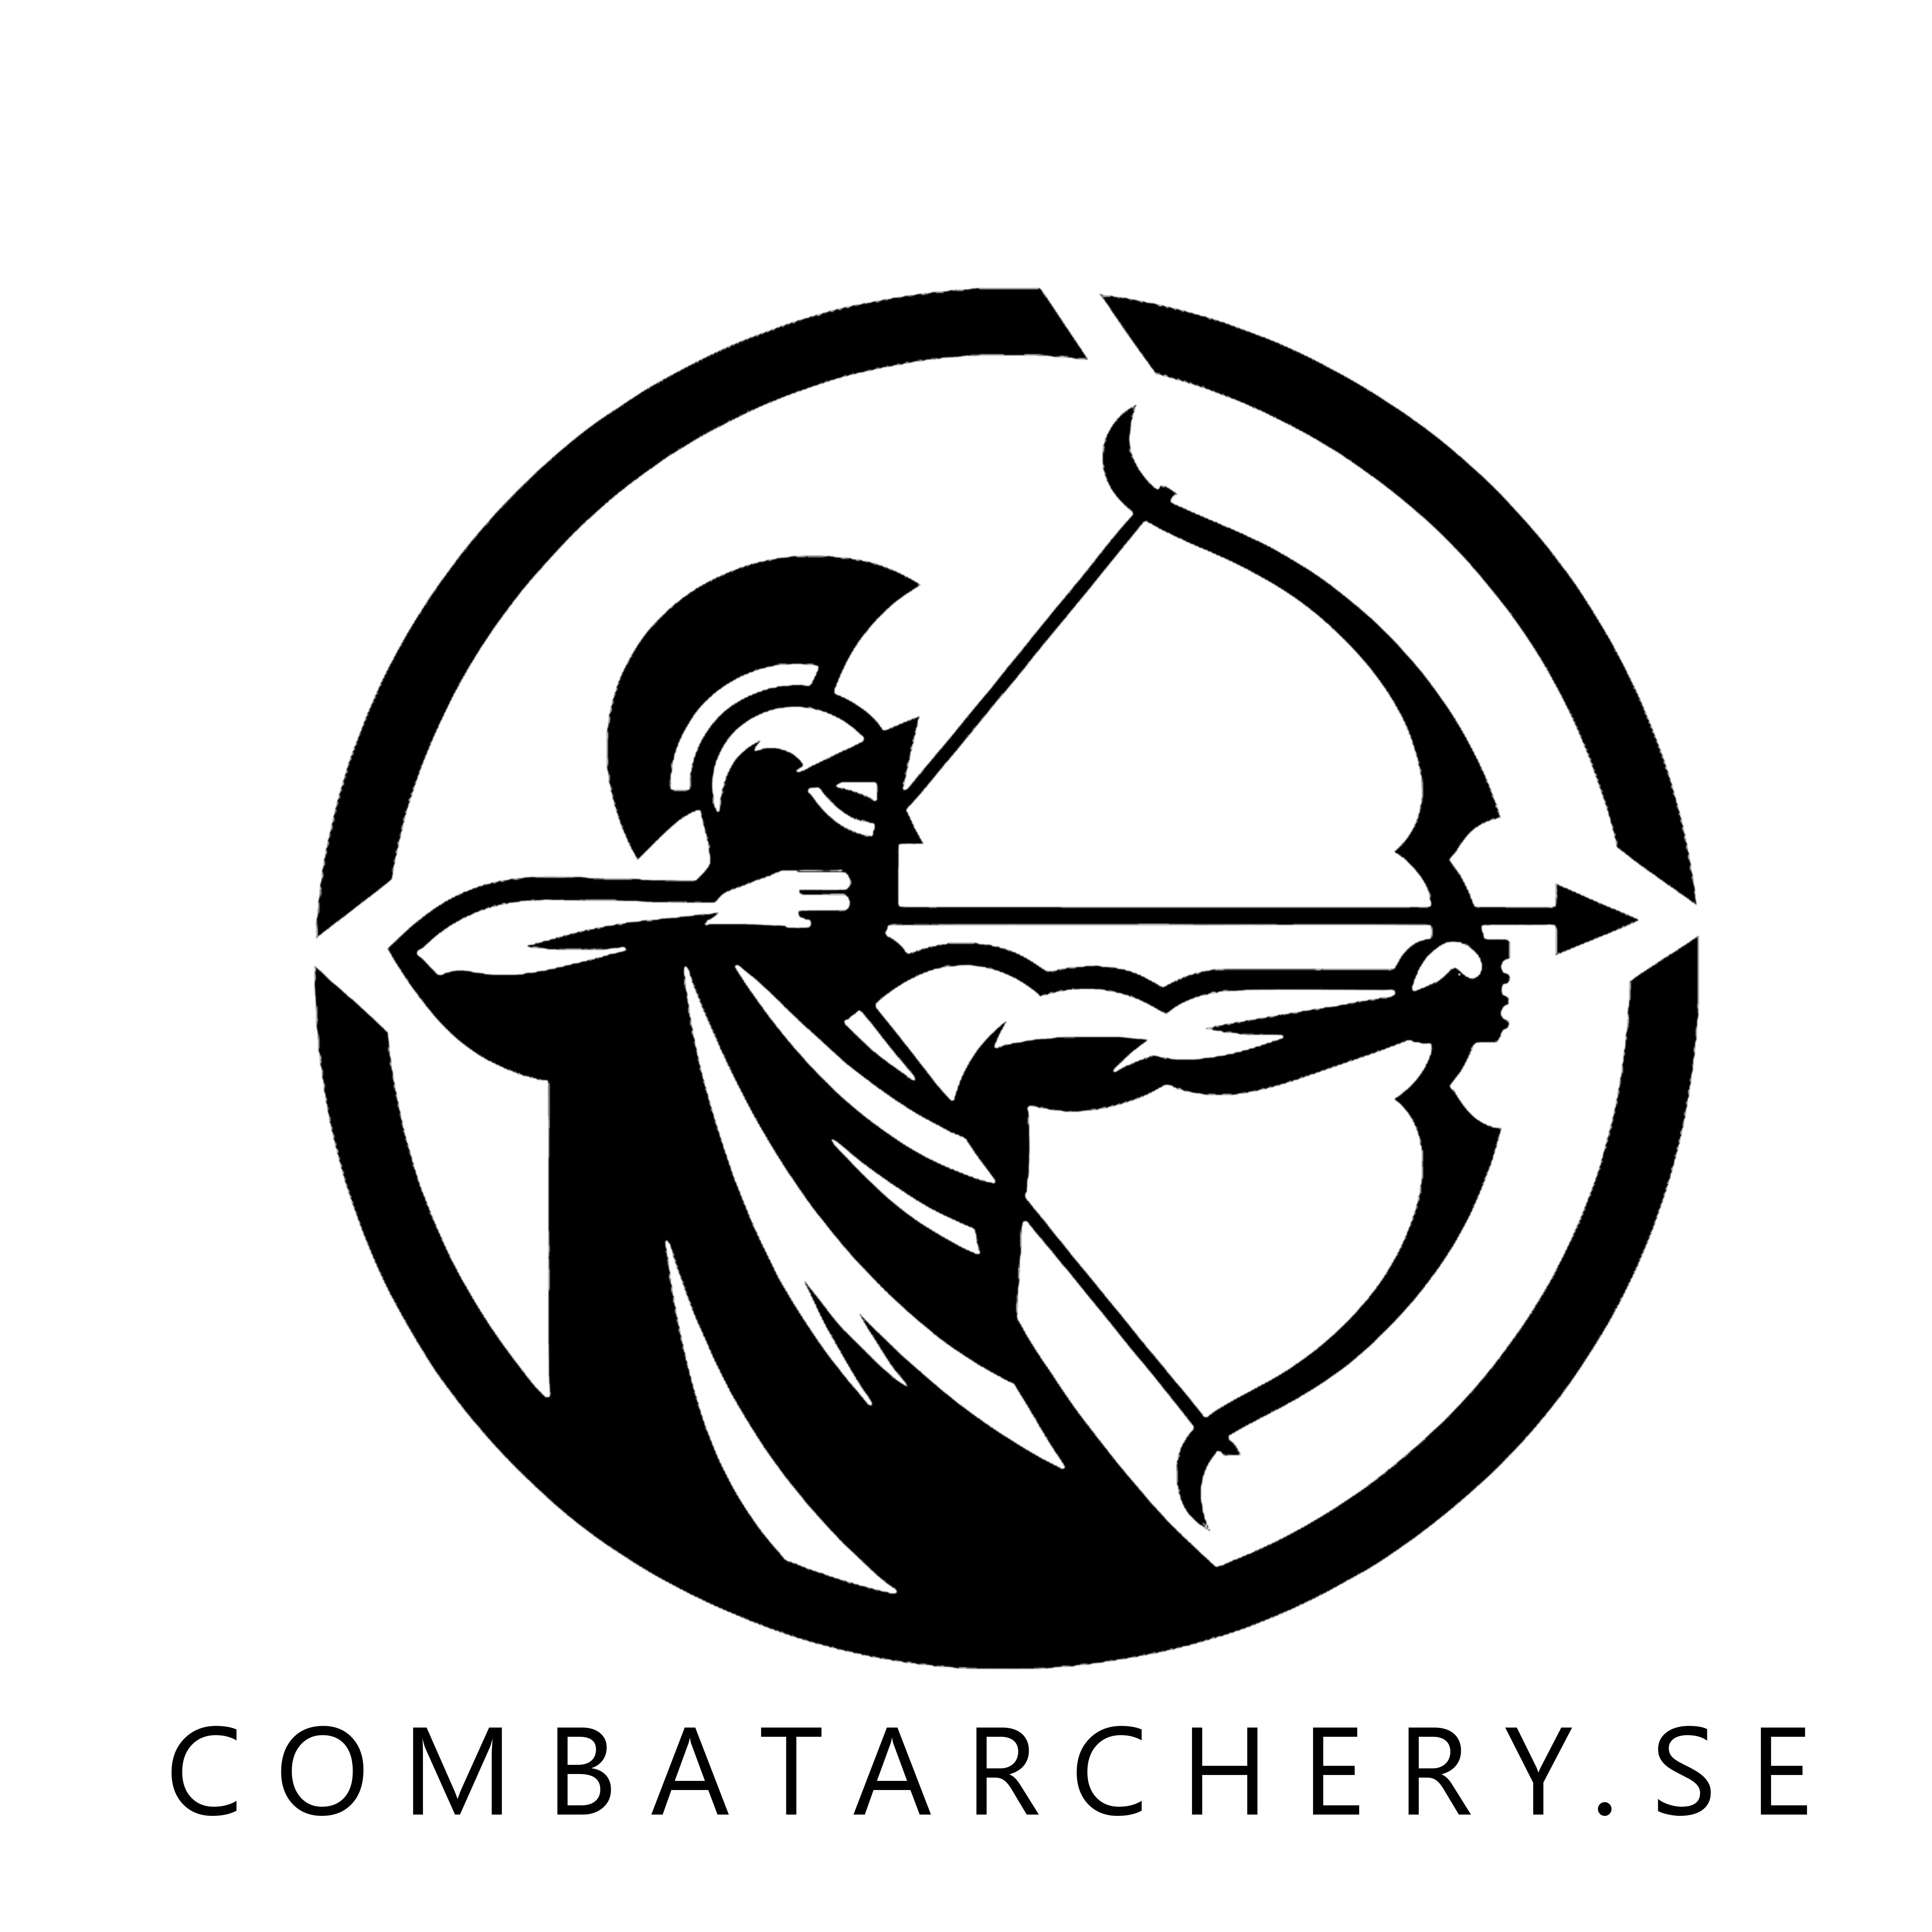 Combatarchery.se